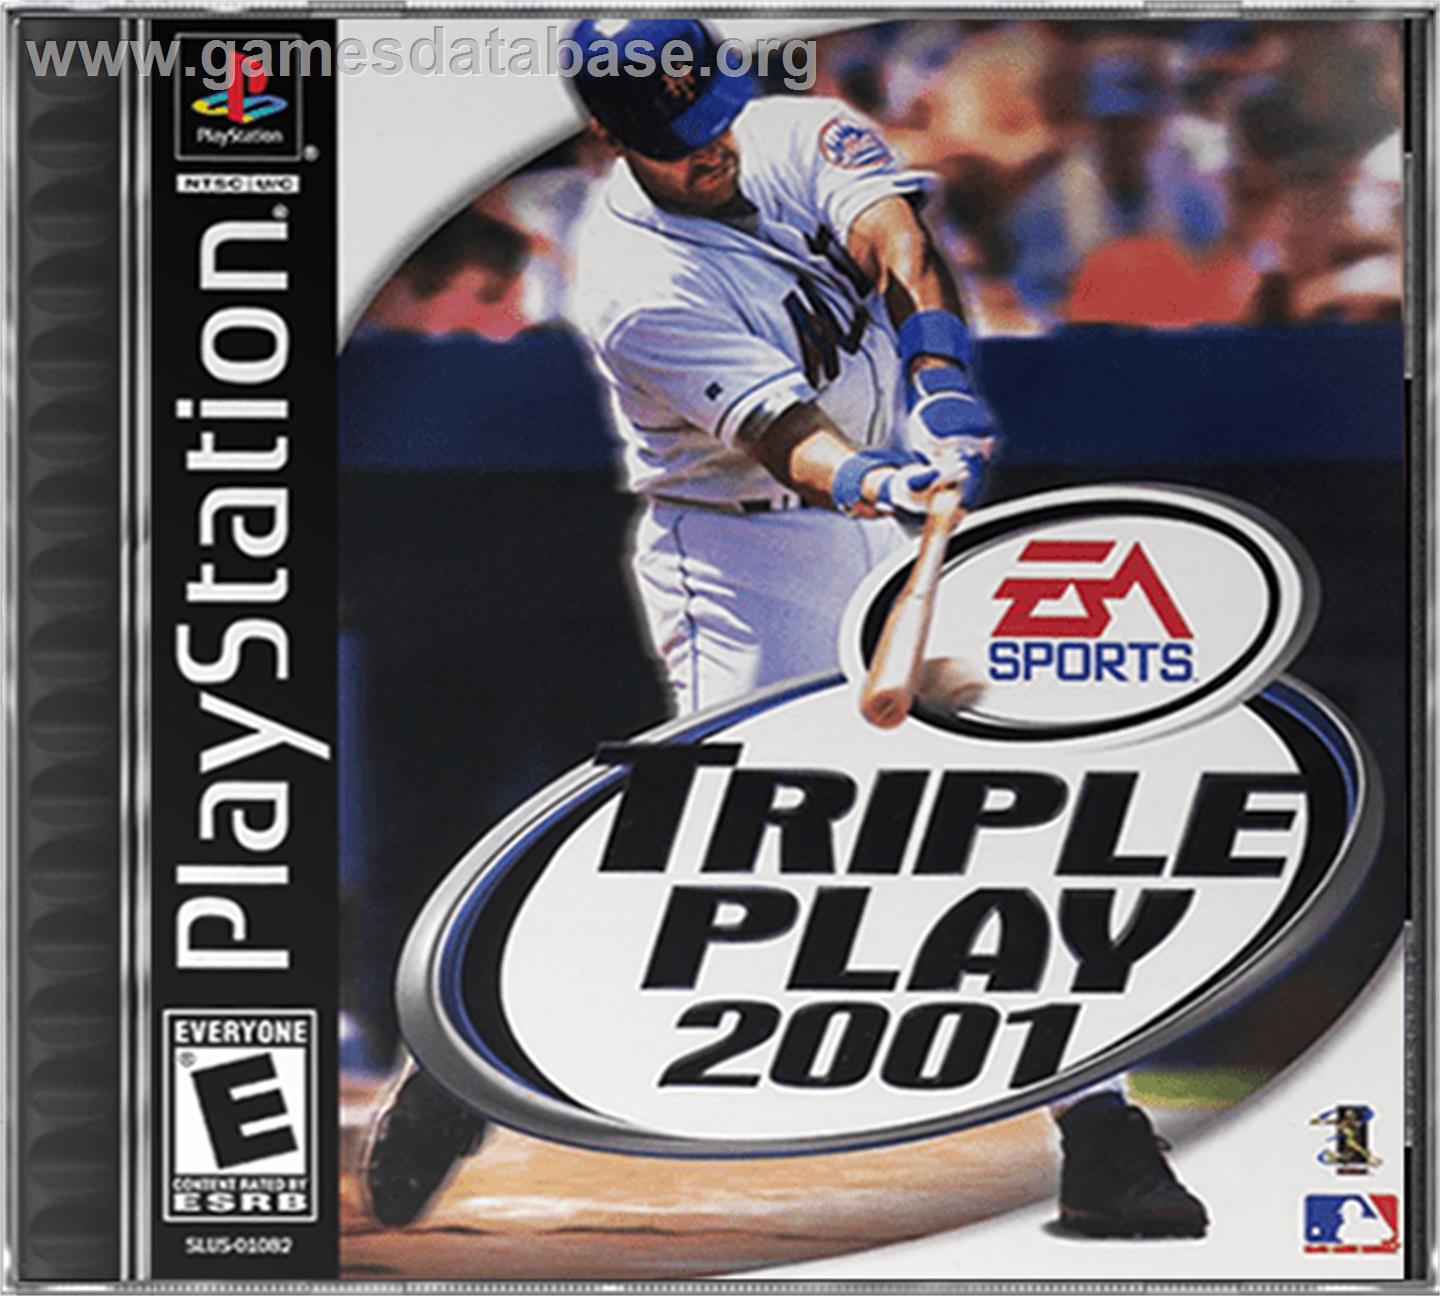 Triple Play 2001 - Sony Playstation - Artwork - Box